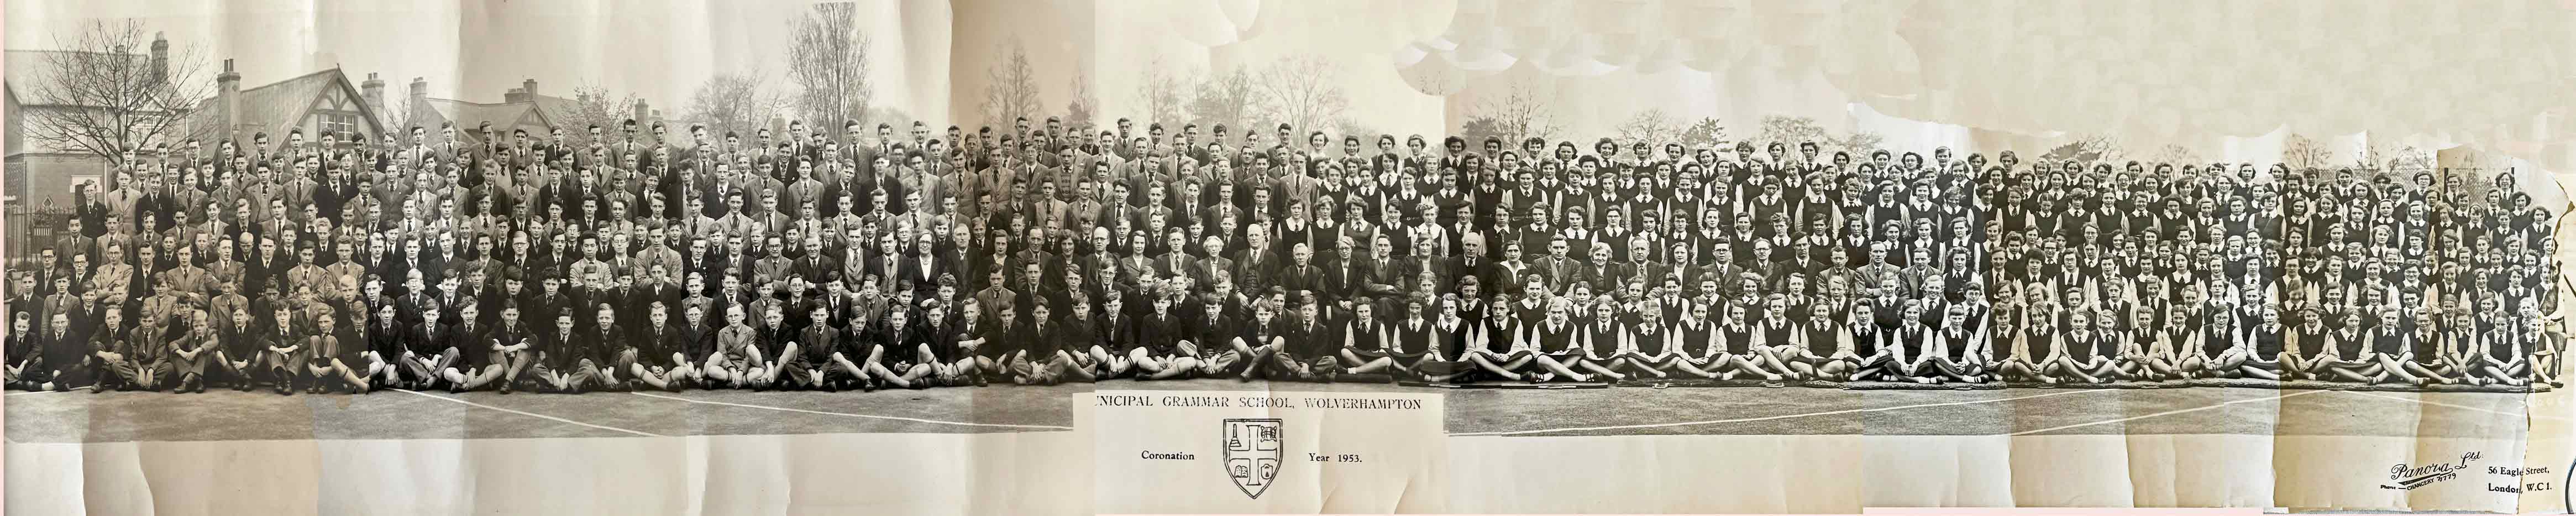 the 1953 School Photograph